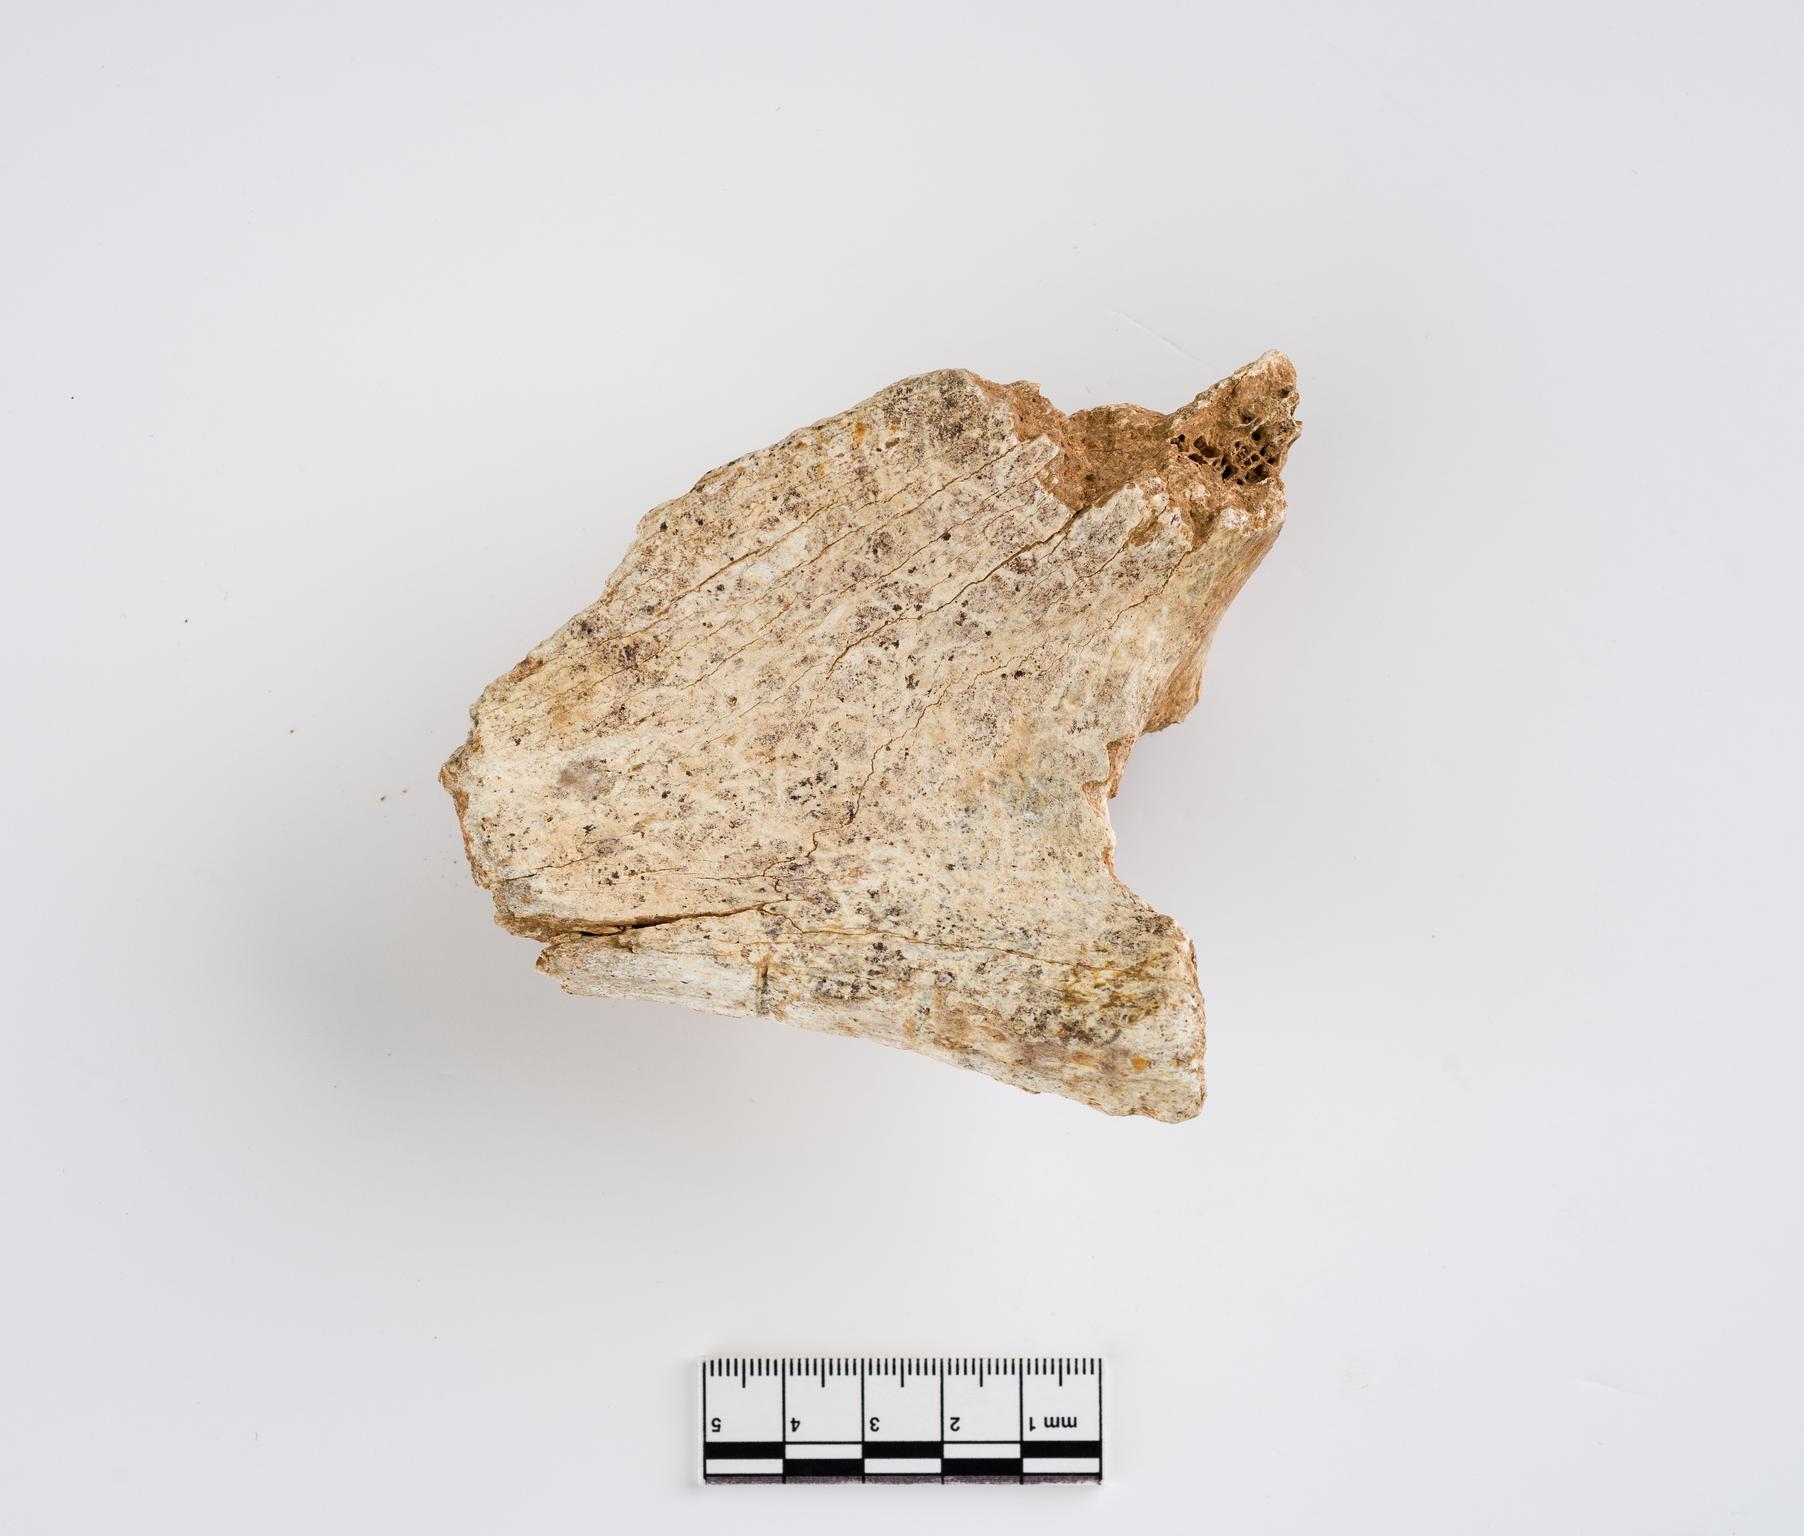 Pleistocene horse bone